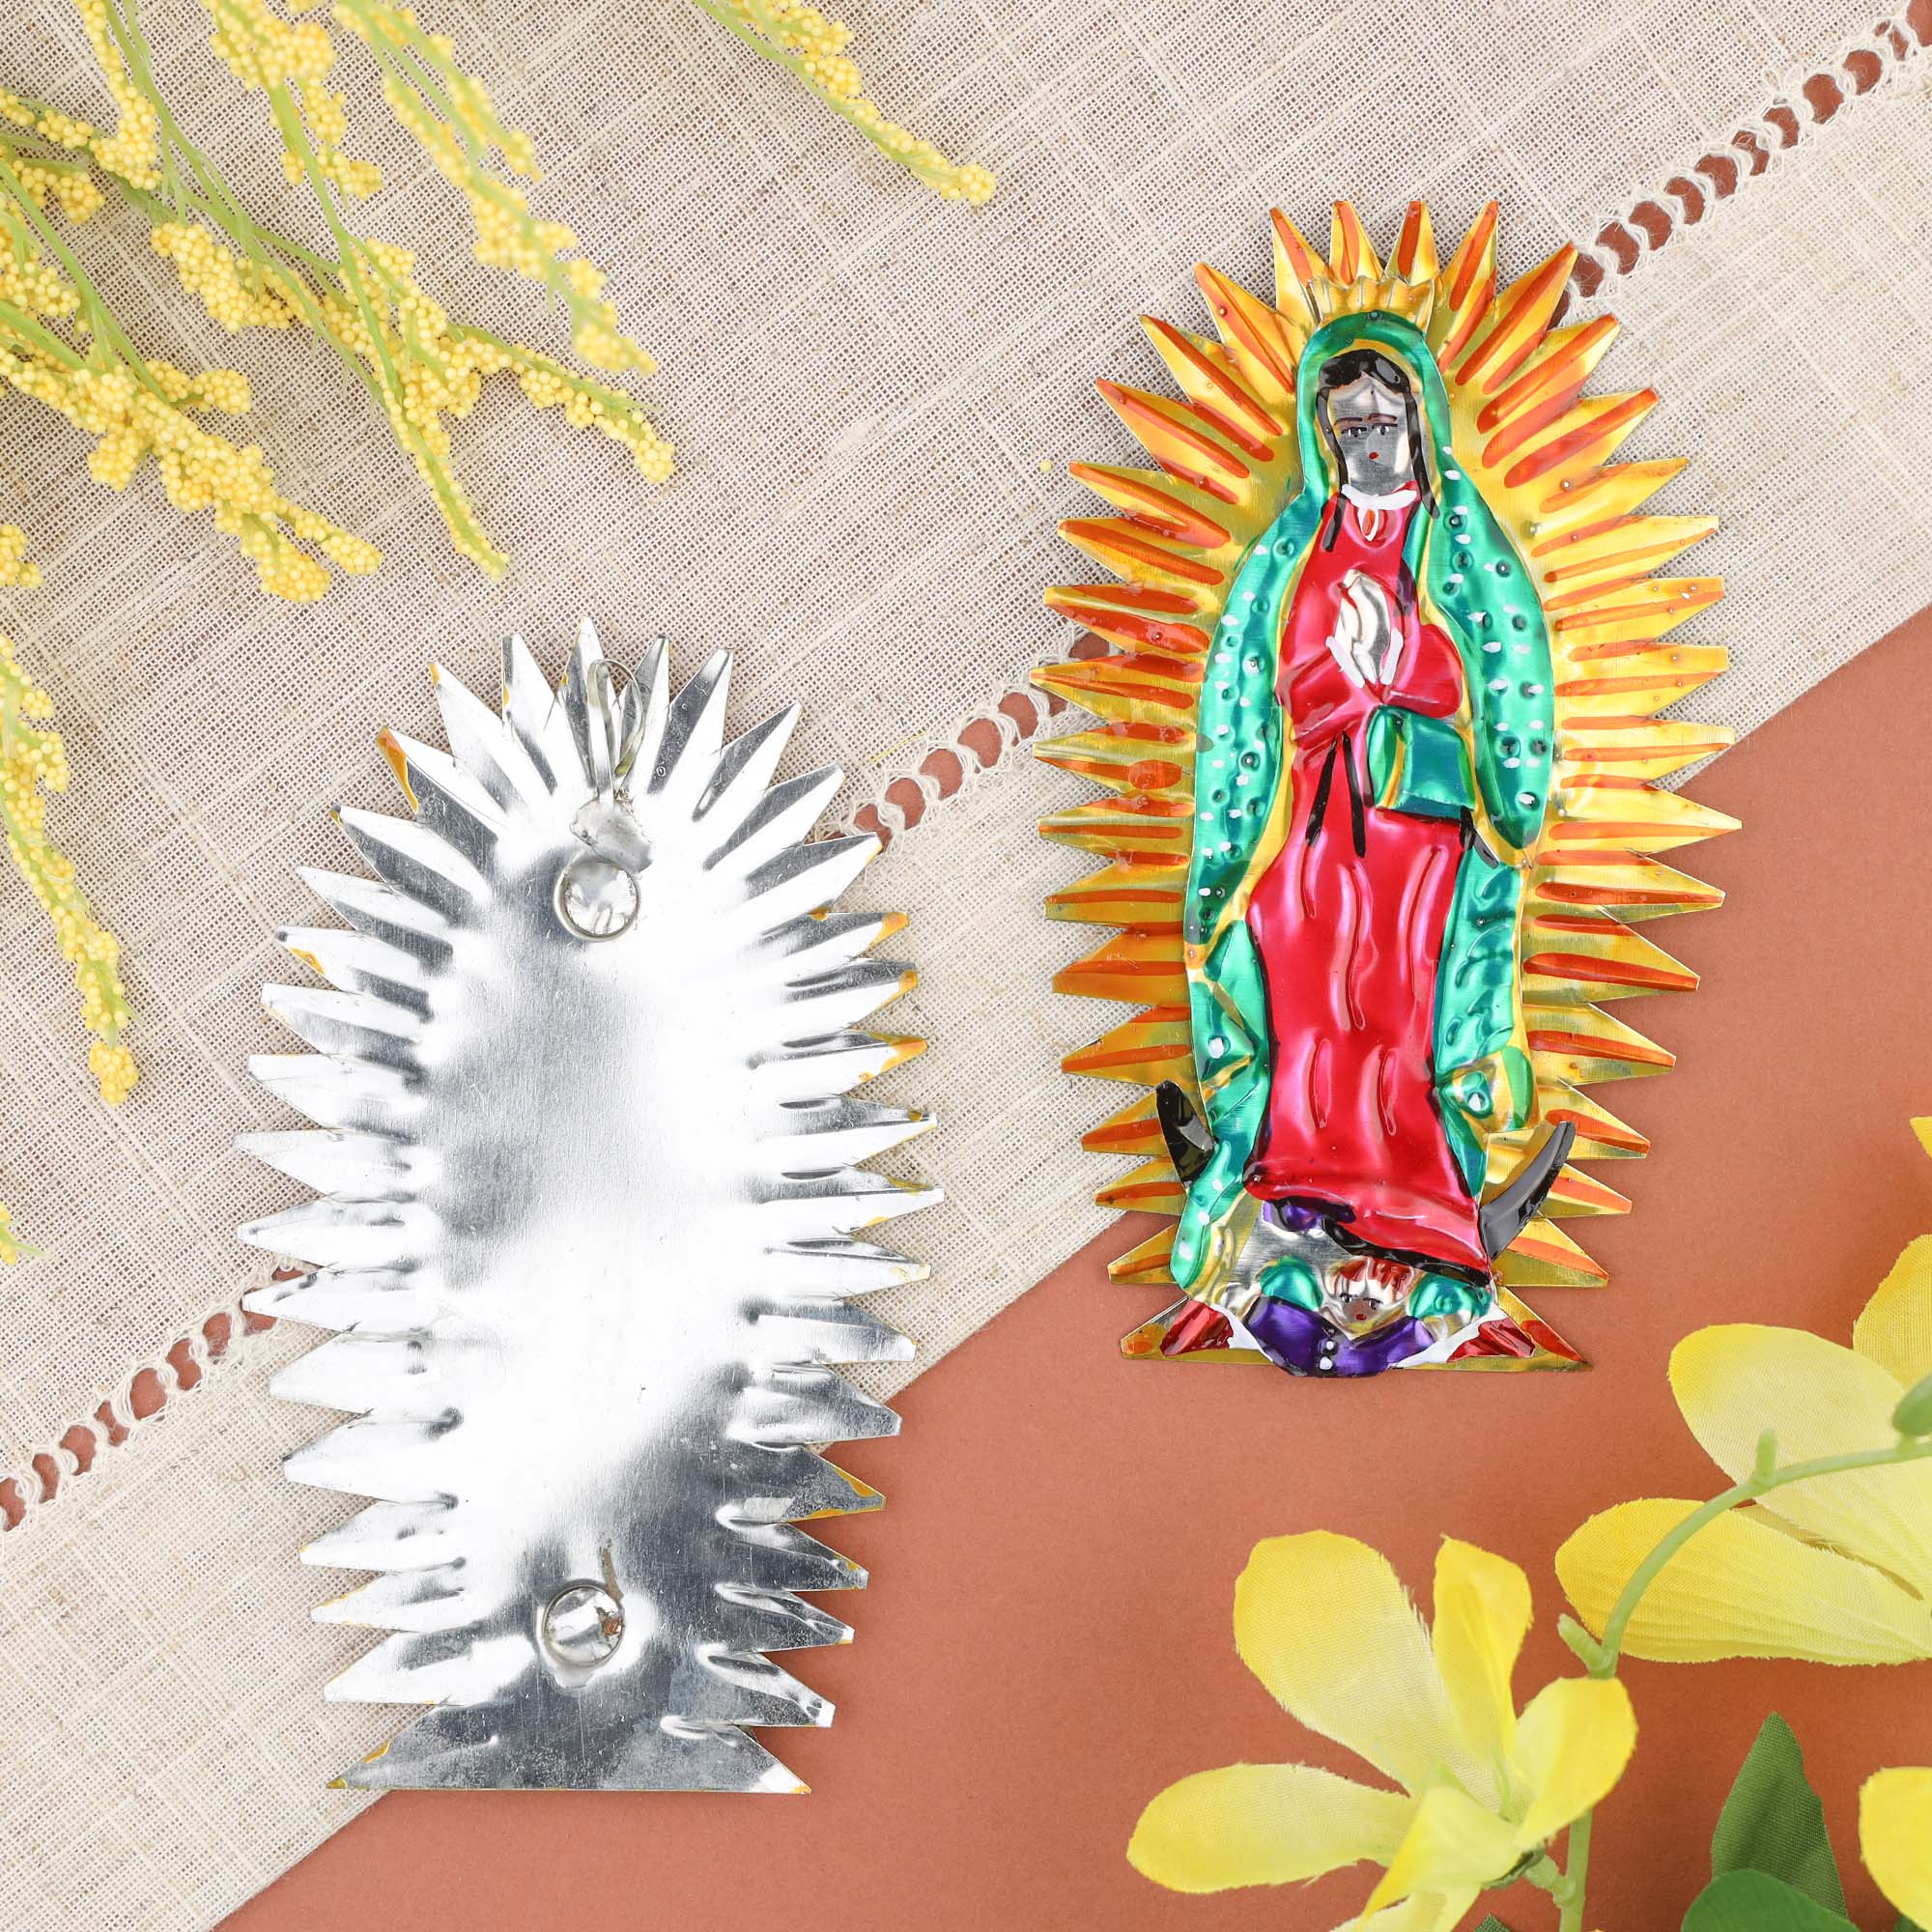 Virgen de Guadalupe Tin Art Ornament